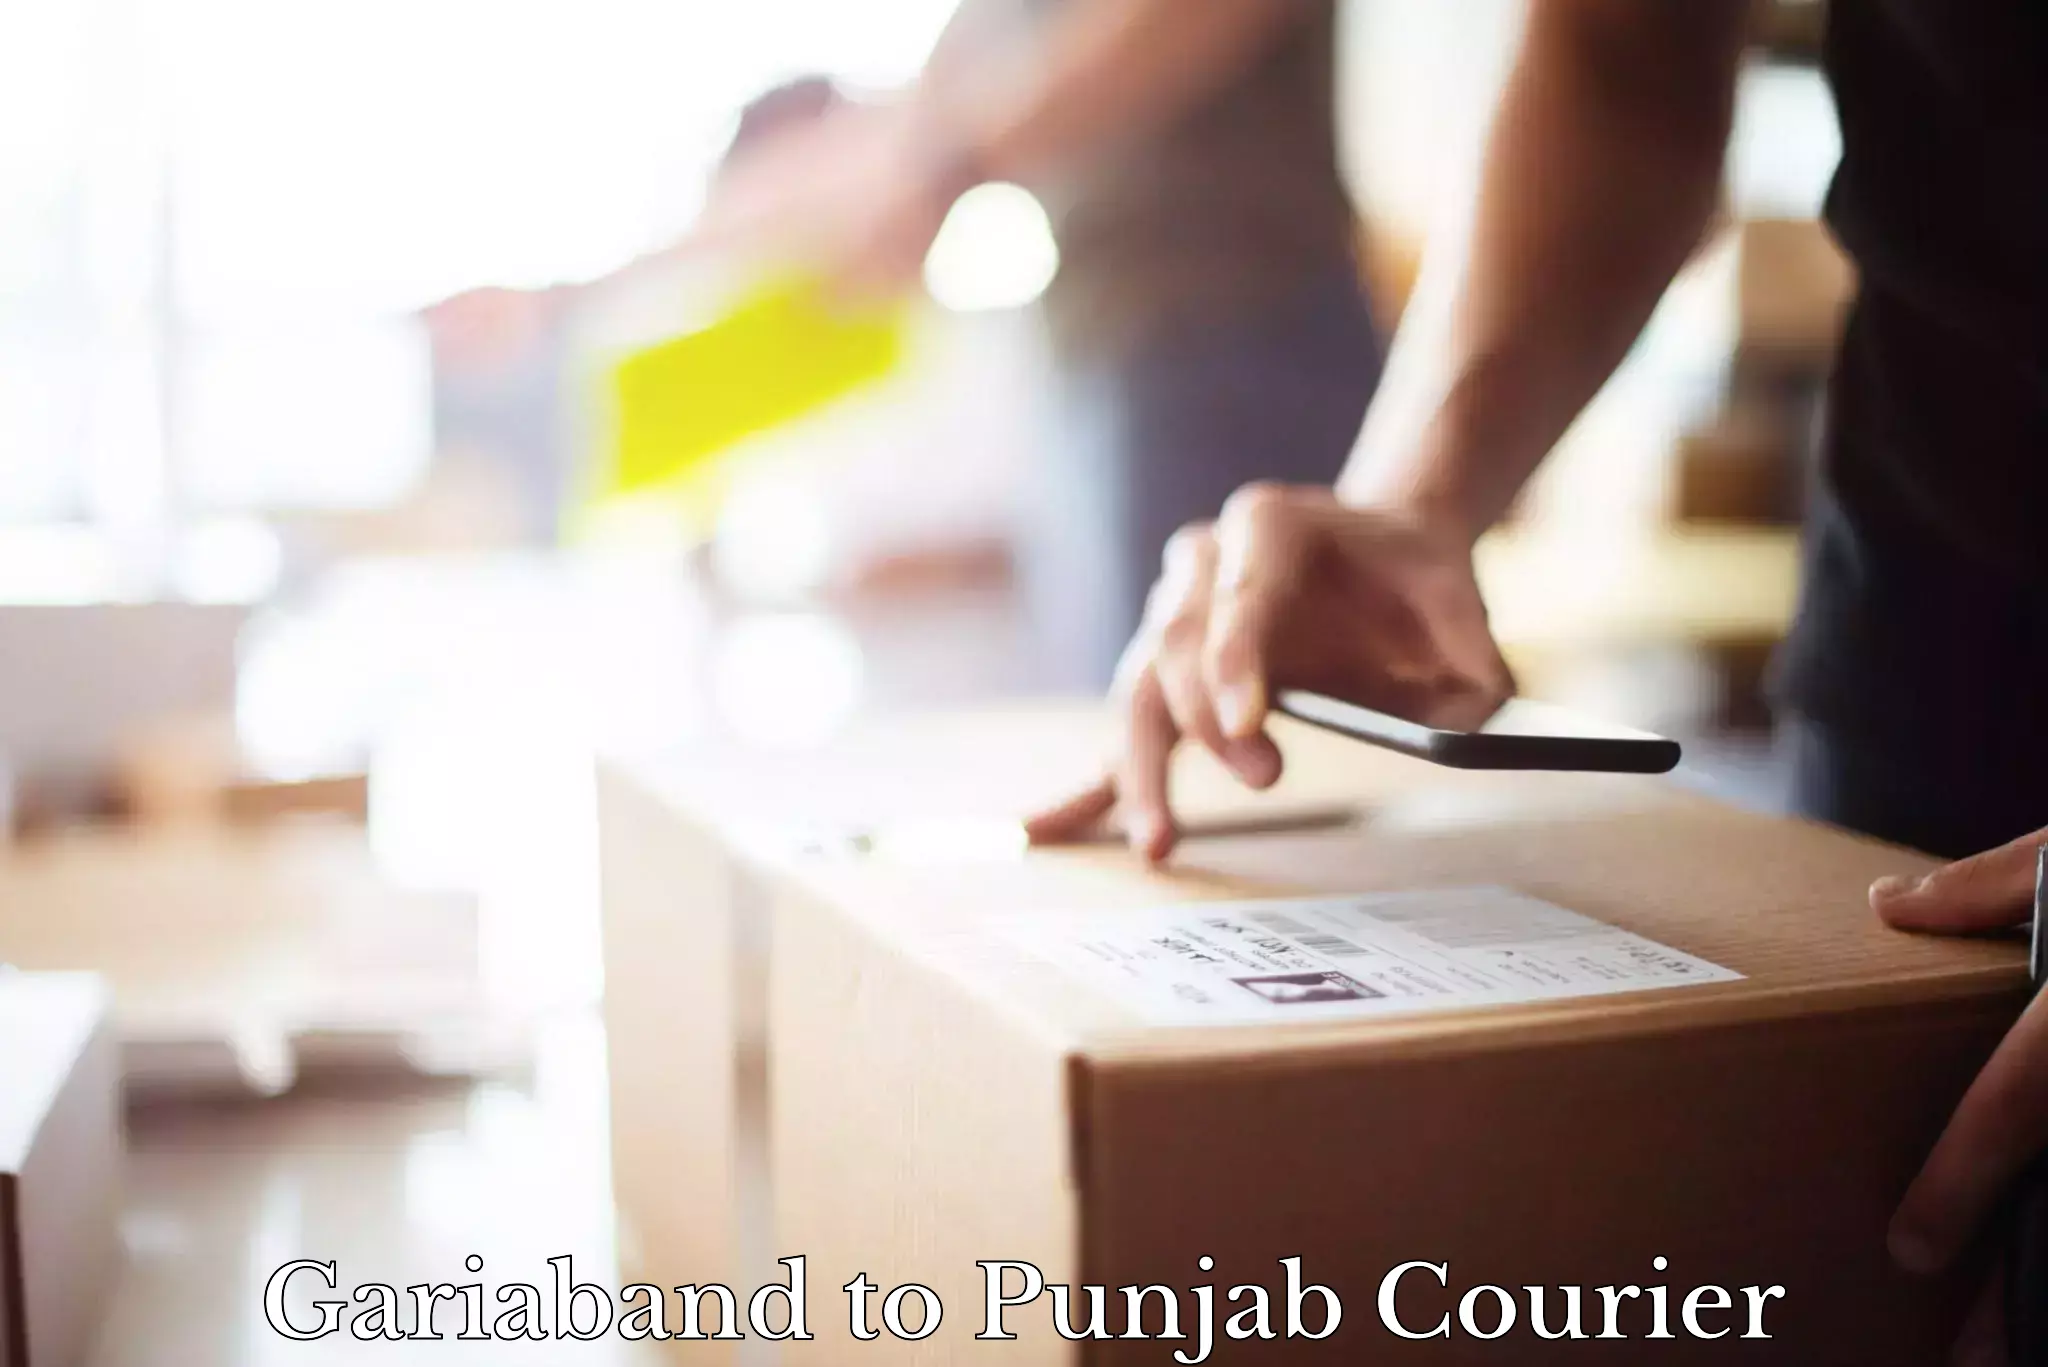 Efficient order fulfillment Gariaband to Punjab